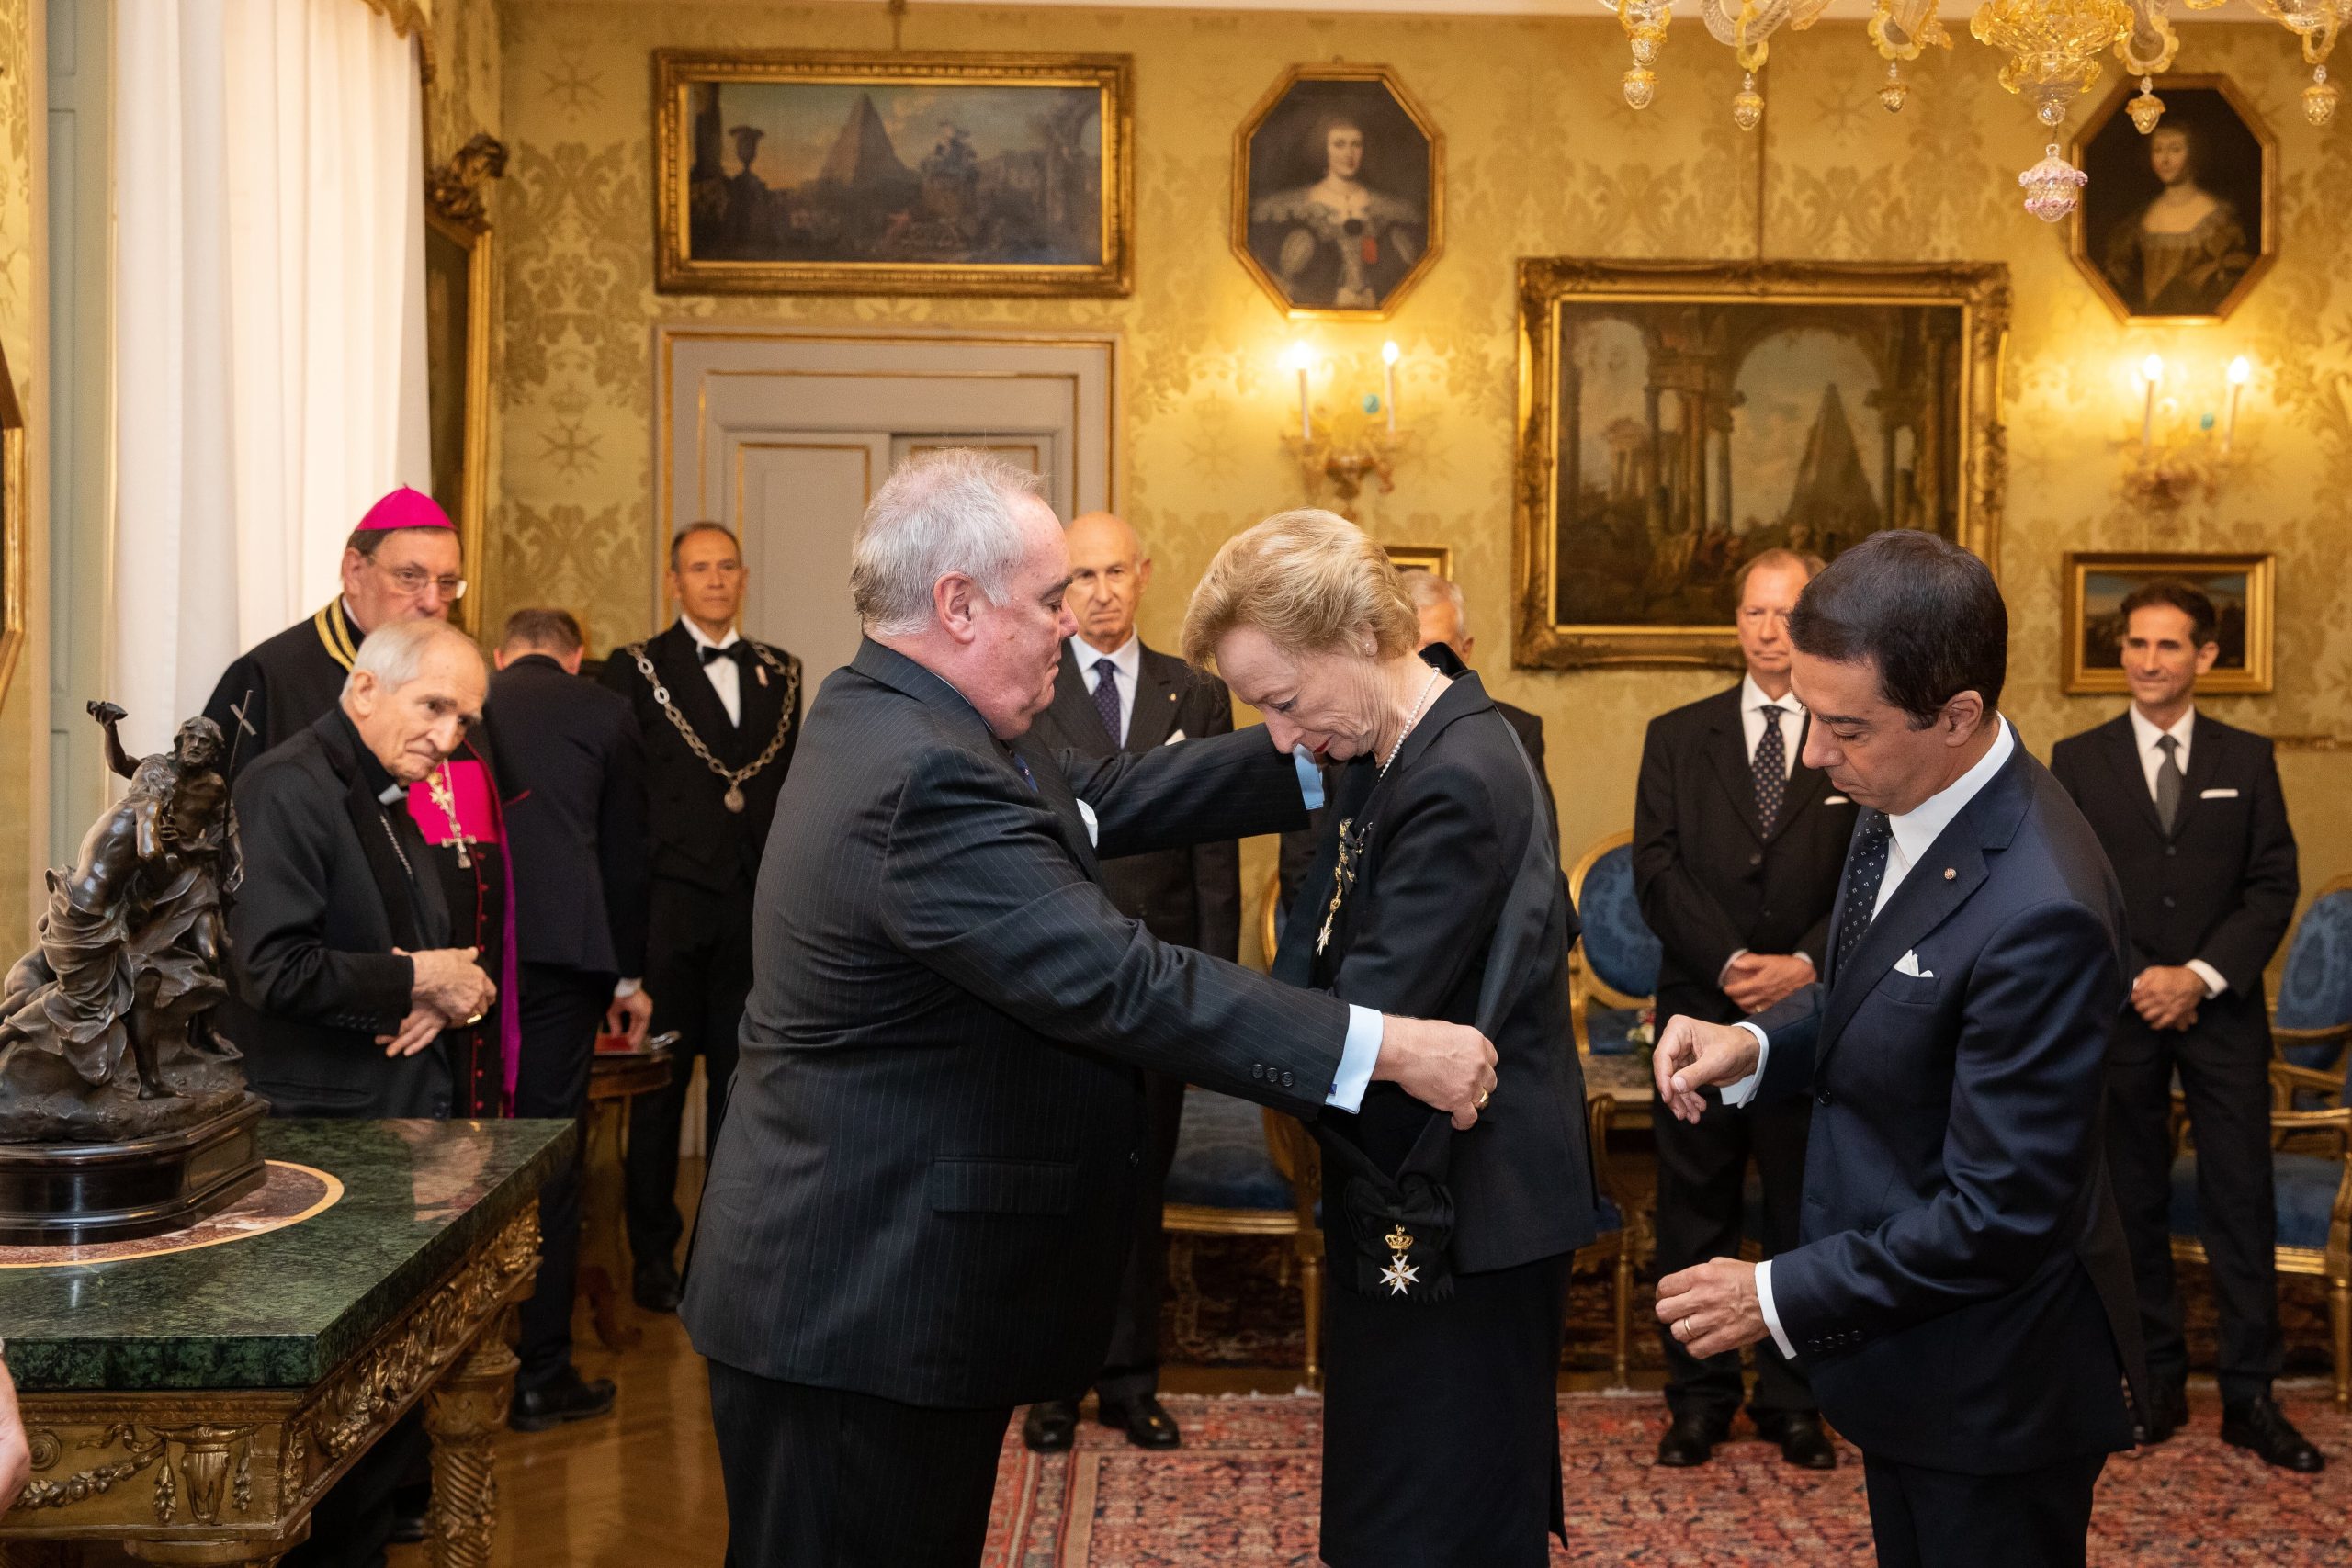 Presentation of the award of the Grand Cross to H.E. Ambassador Marie-Thérèse Pictet-Althann